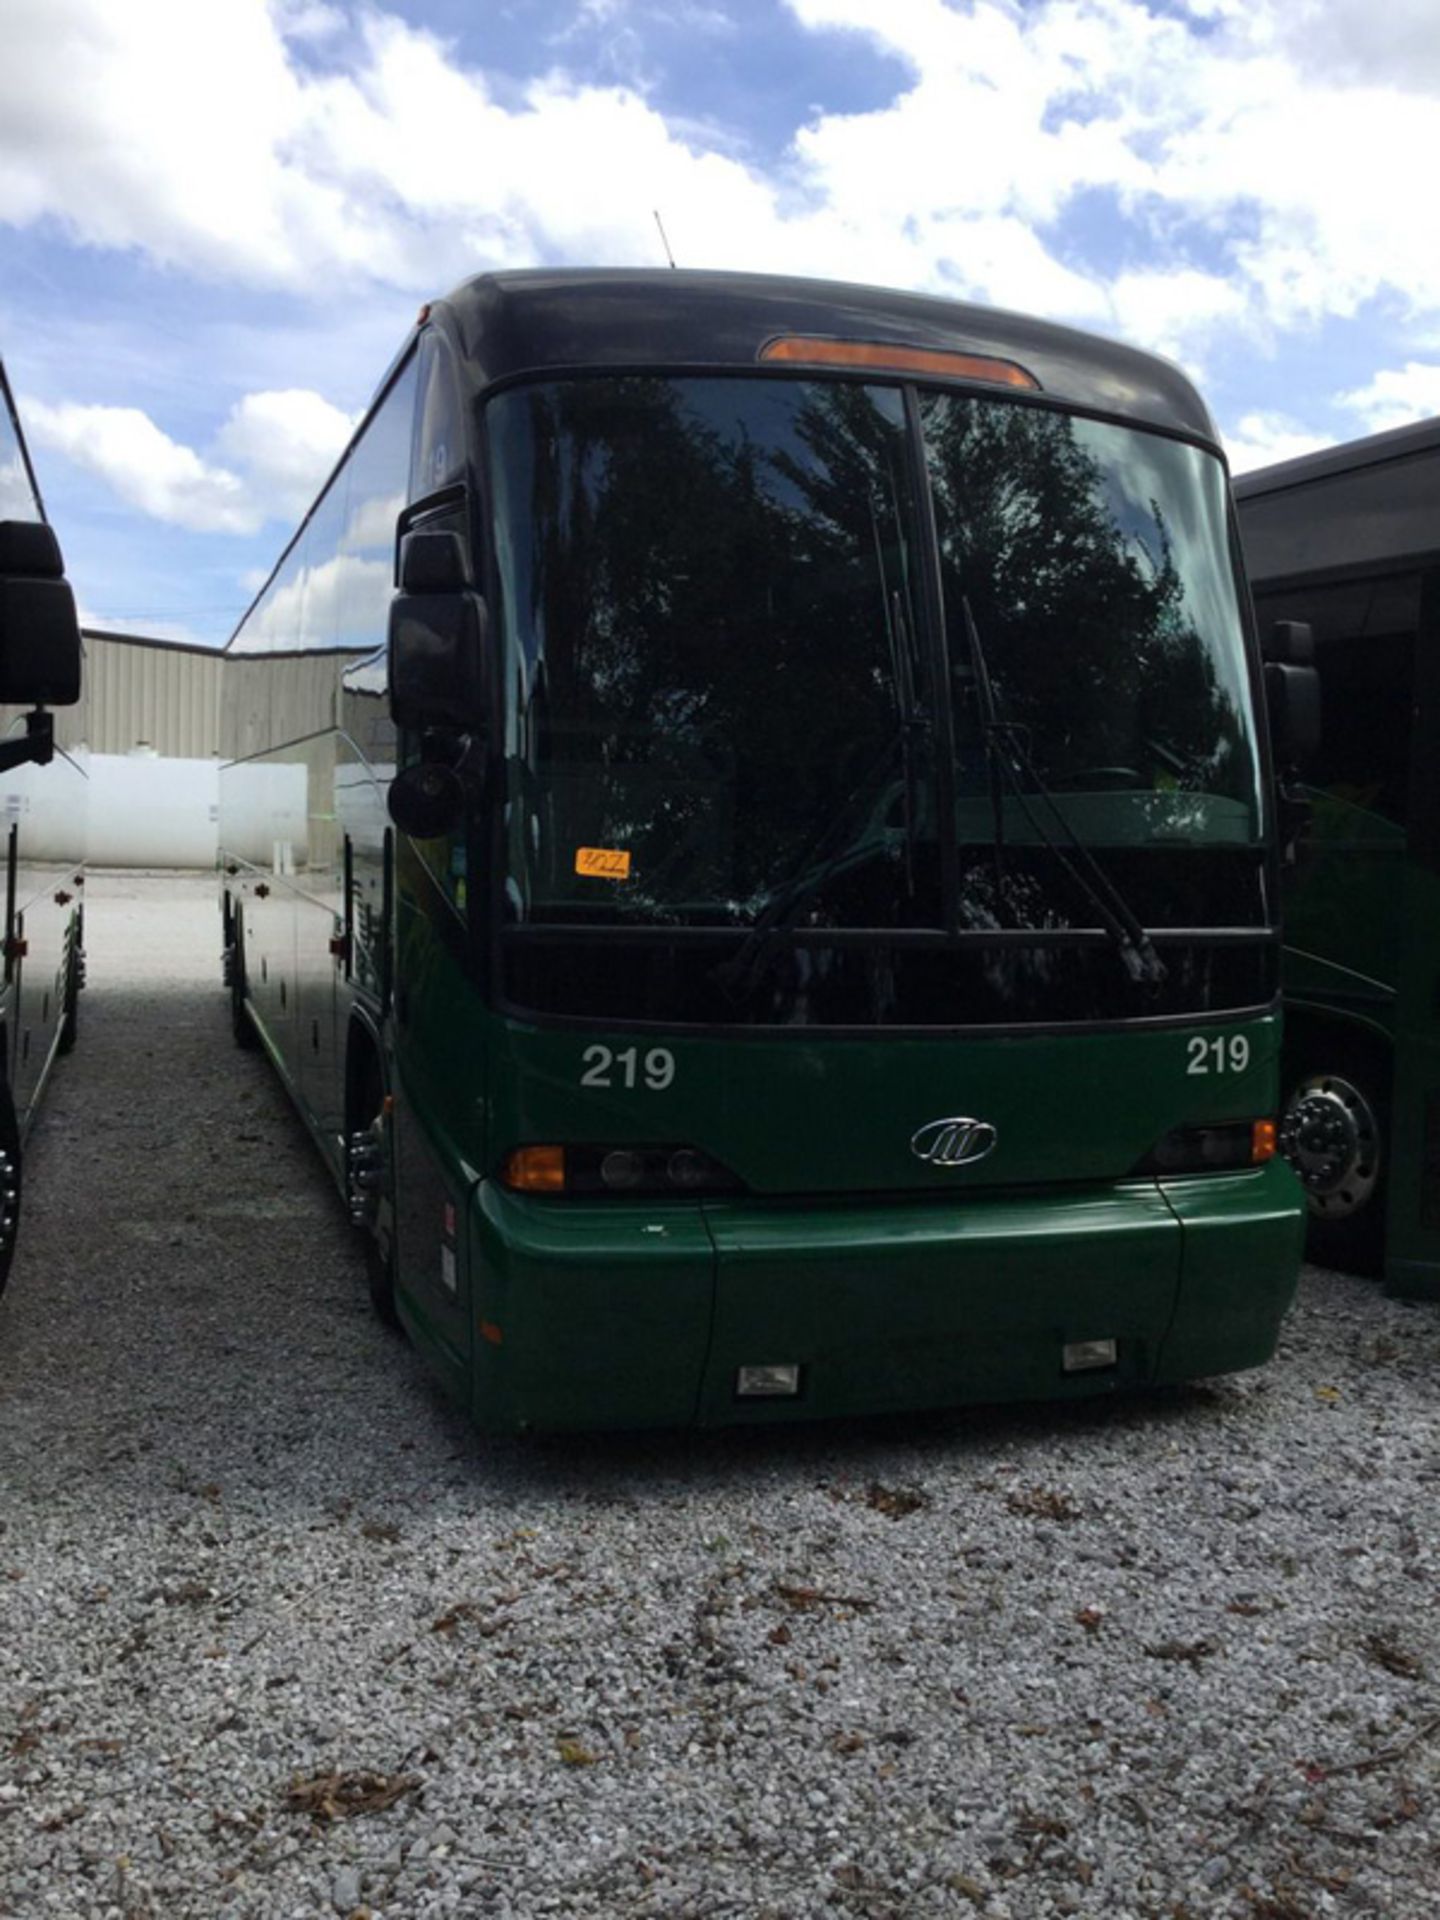 2011 MCI J4500 56-Passenger Charter Bus - Dual Axle, VIN 2MG3JMEA0BW065689, 487,843 Miles (Bus